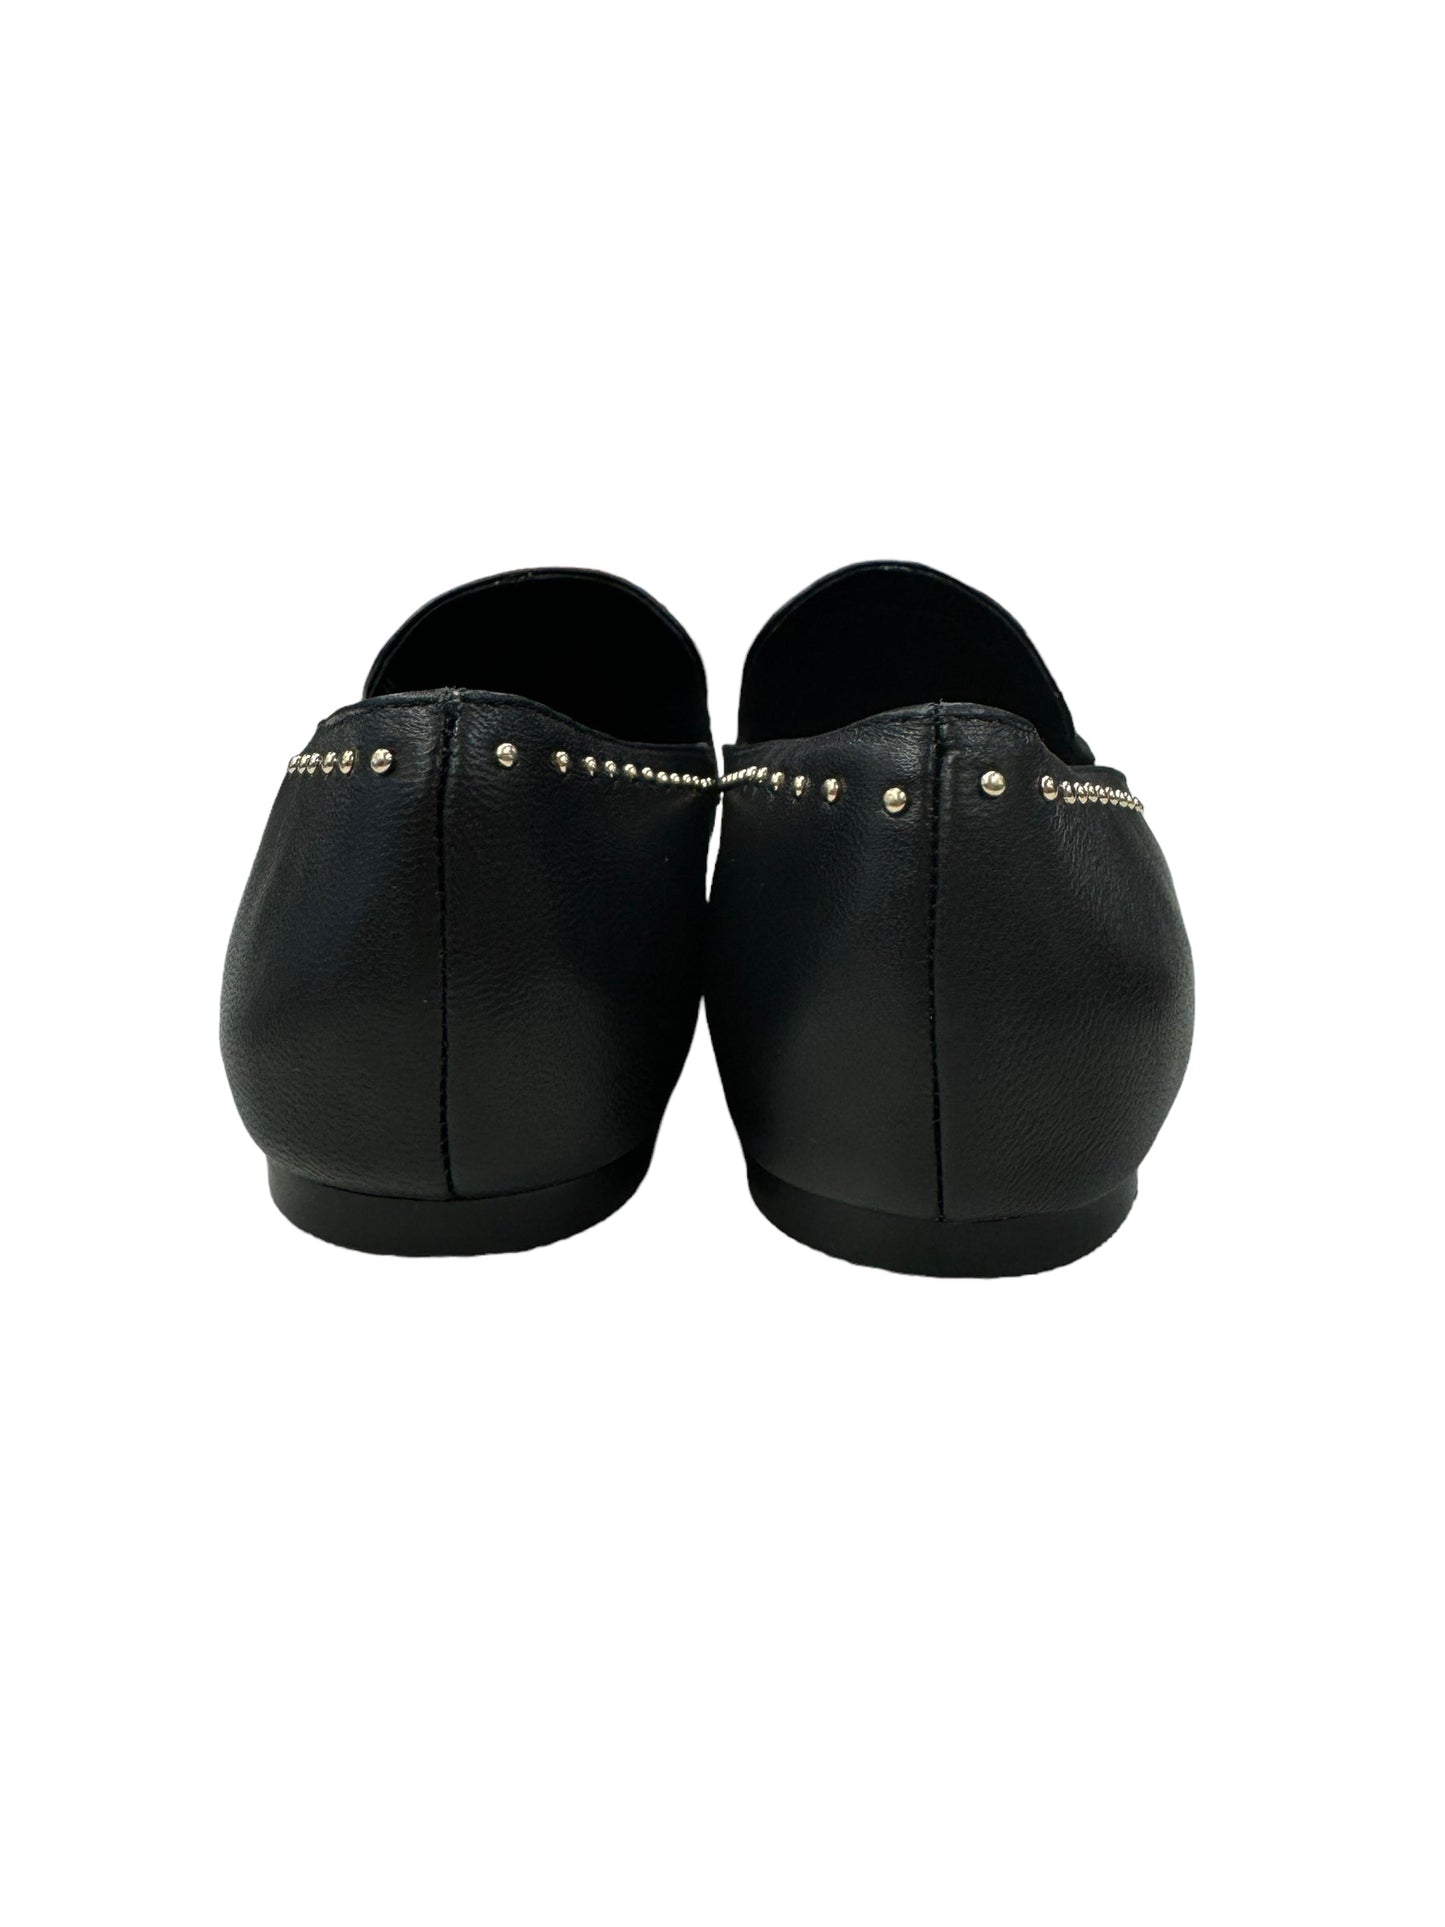 Black Shoes Flats Chicos, Size 8.5